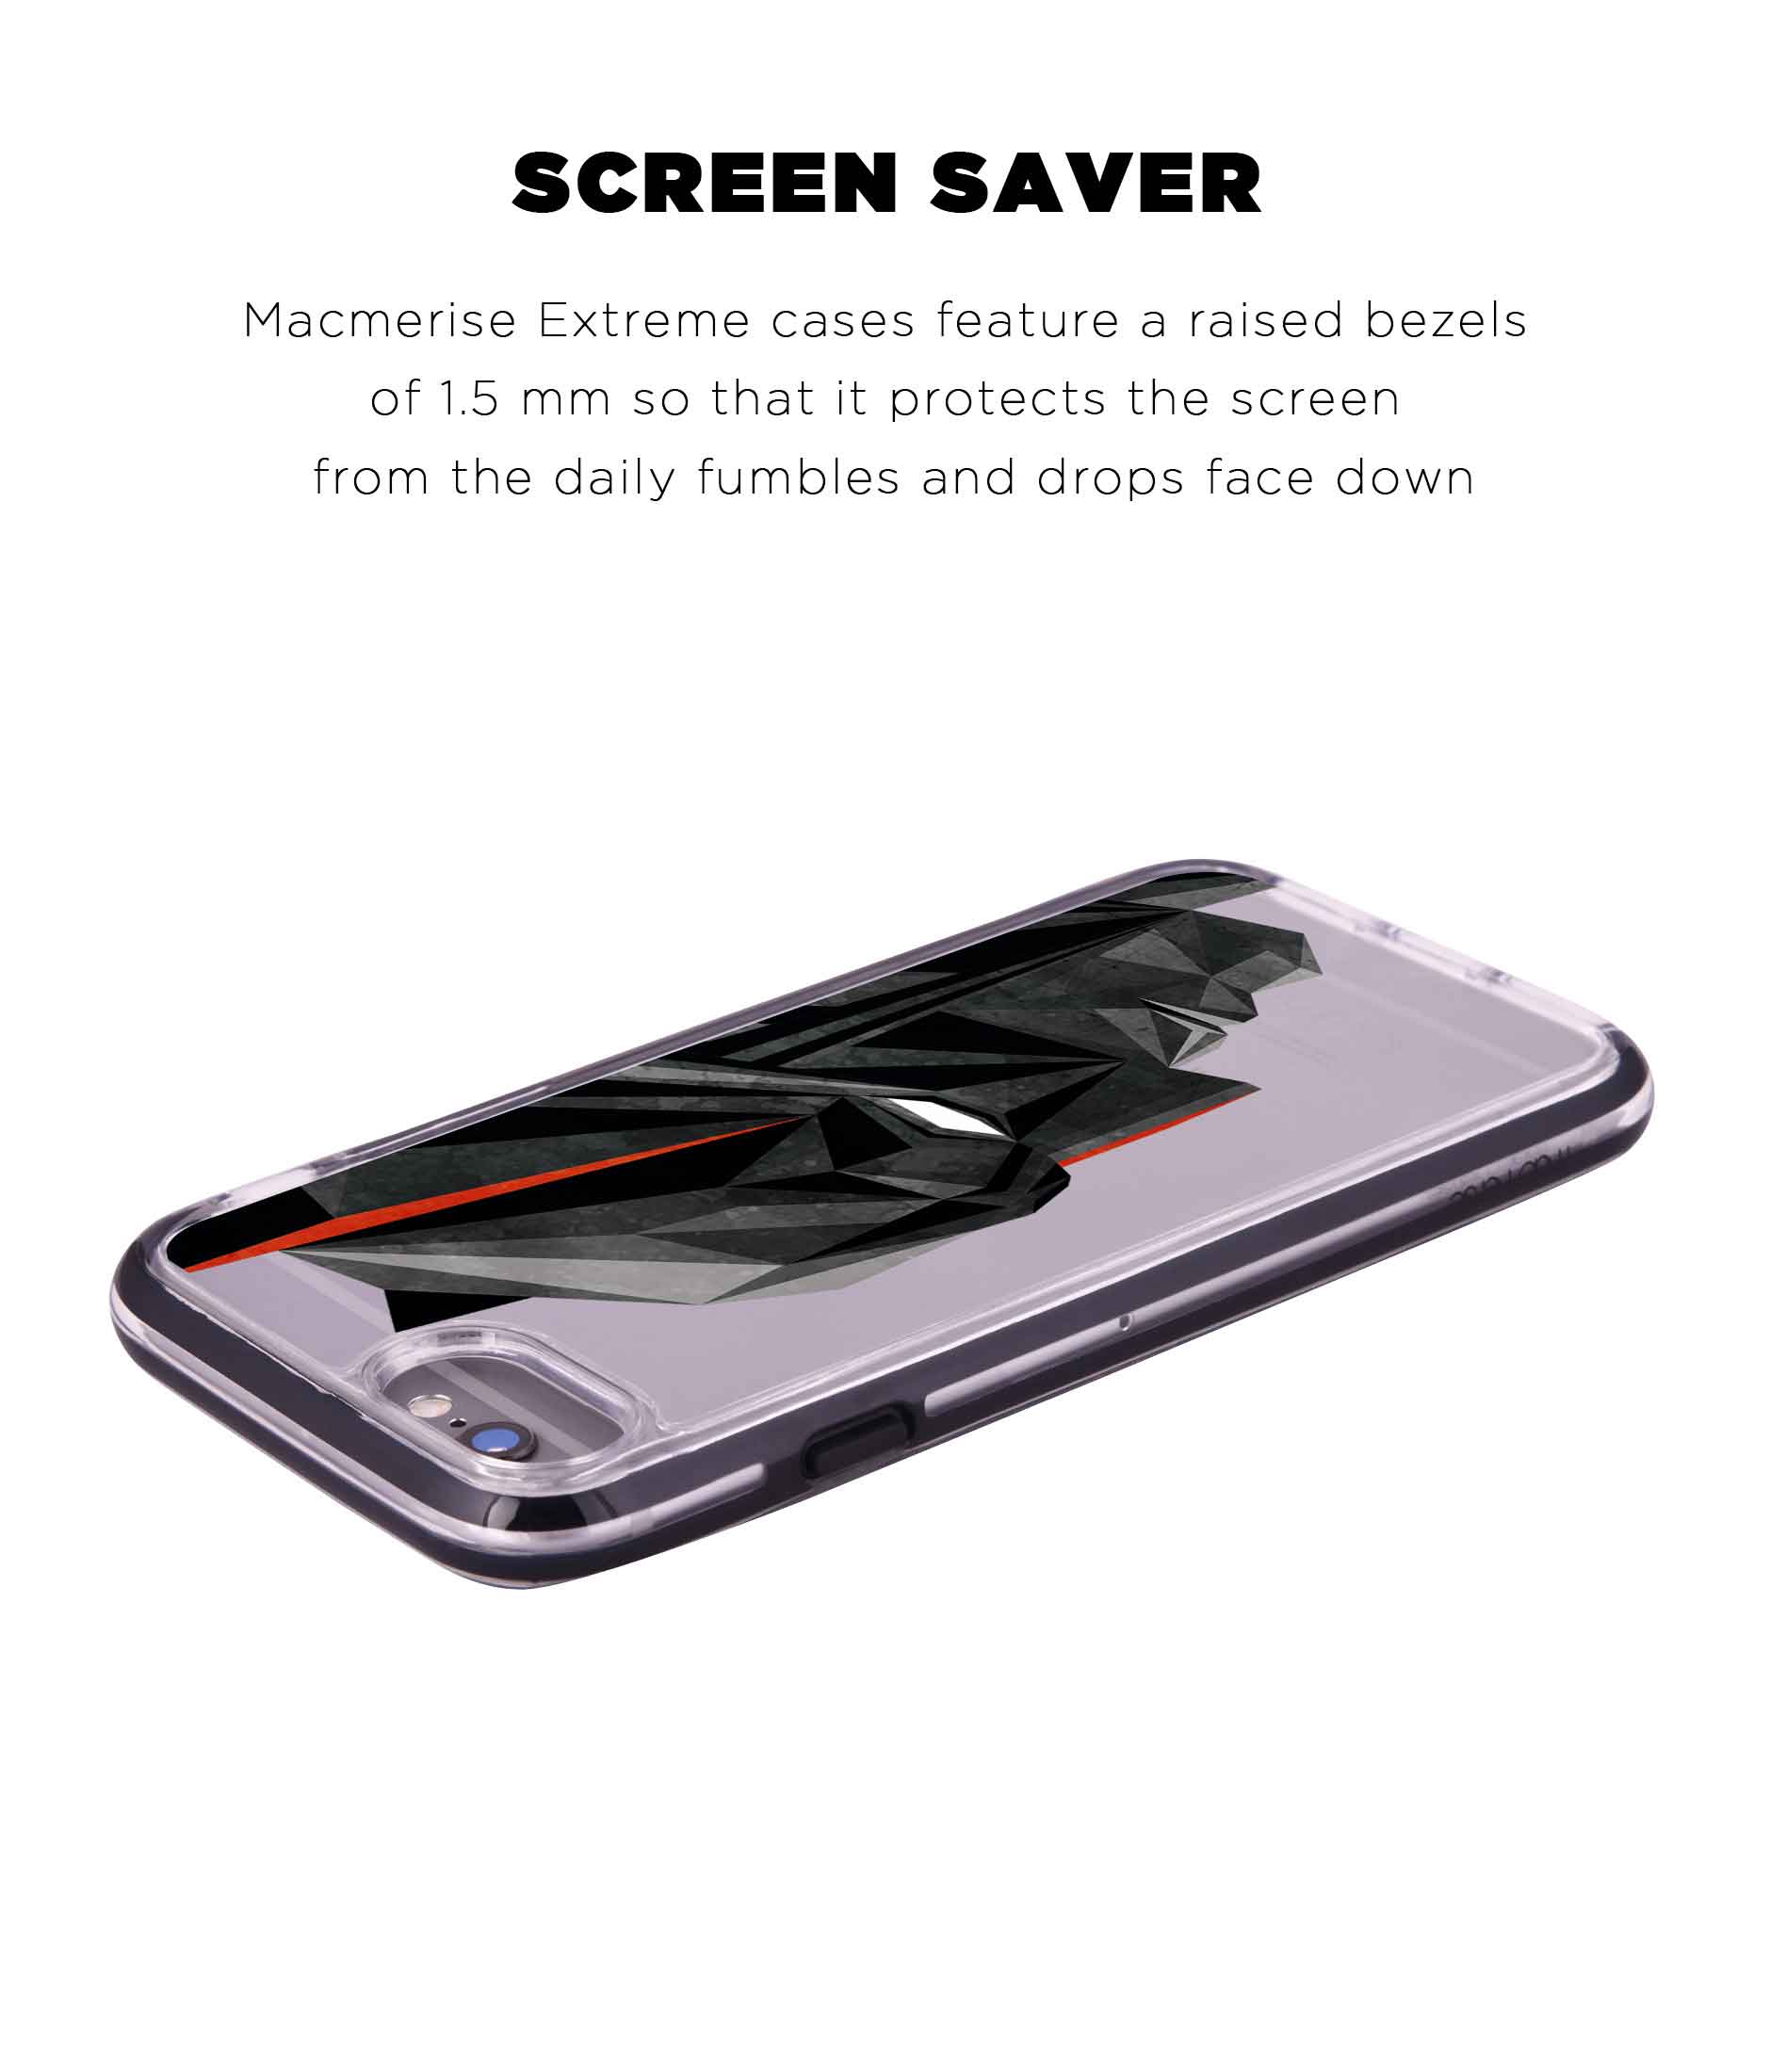 Batman Geometric - Extreme Phone Case for iPhone 6